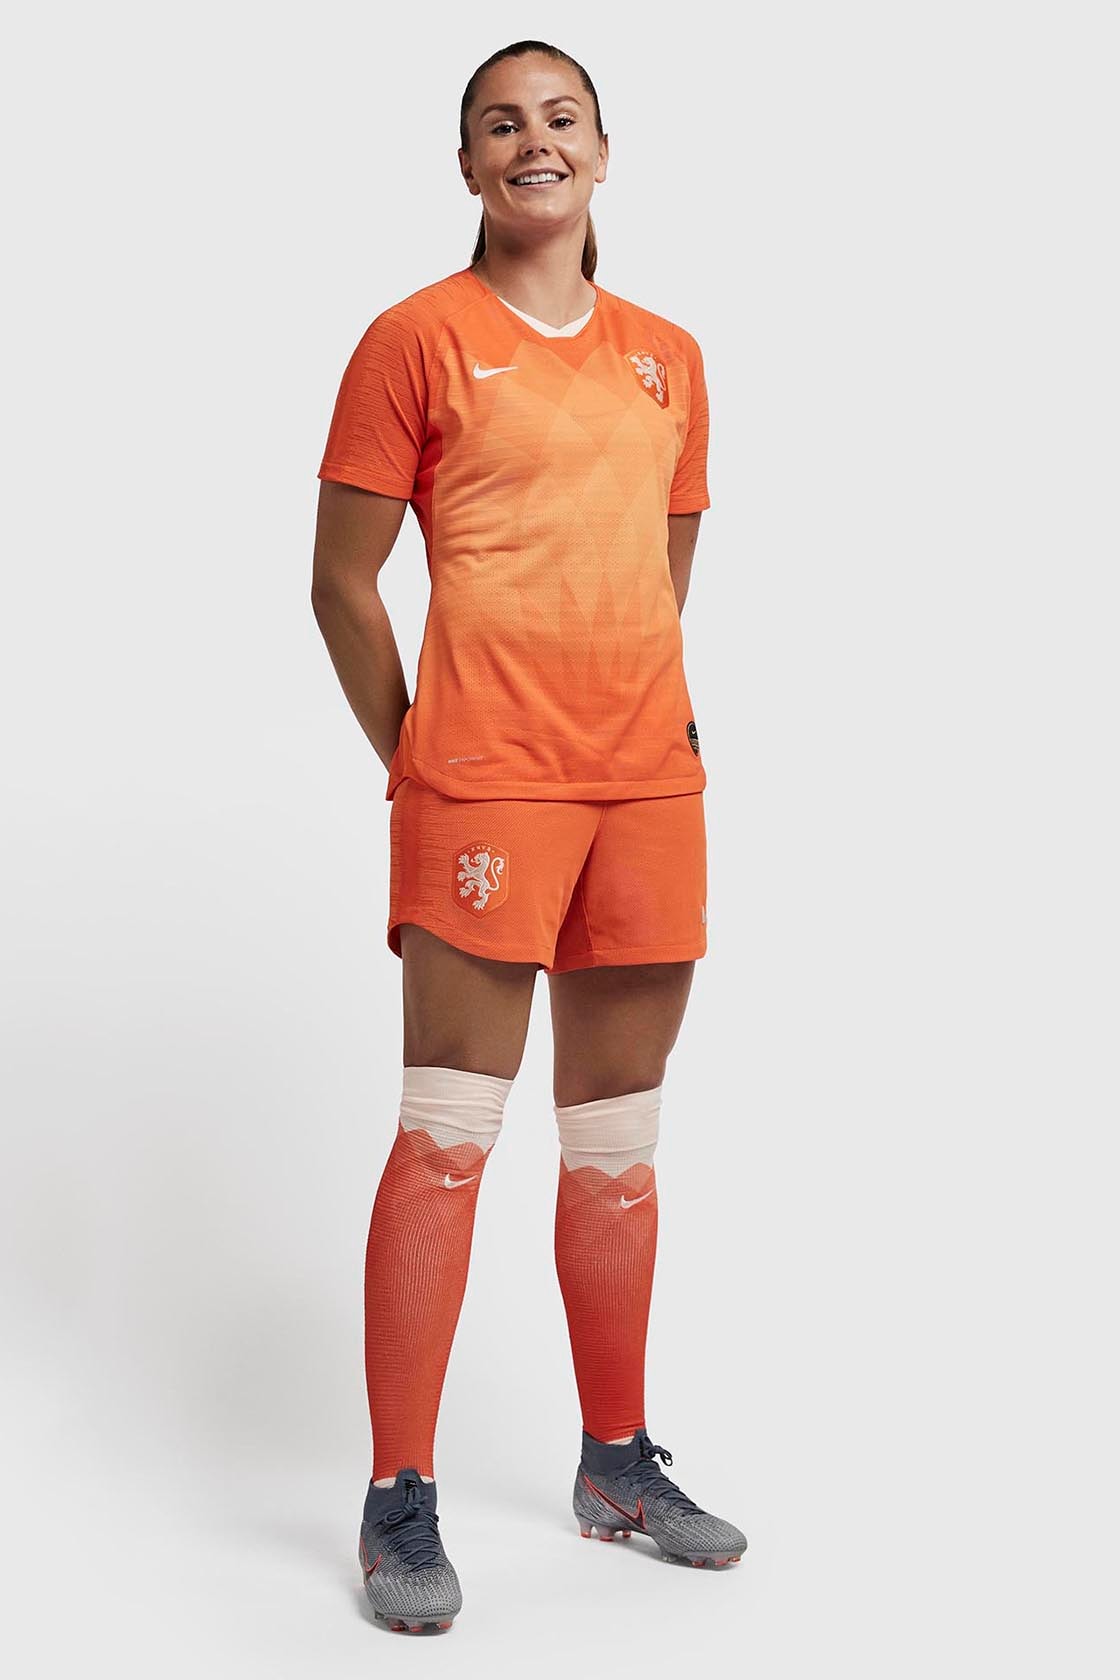 Nike 2019 Women's World Cup Kit Reveal Paris France England USA Canada Brazil China Jerseys